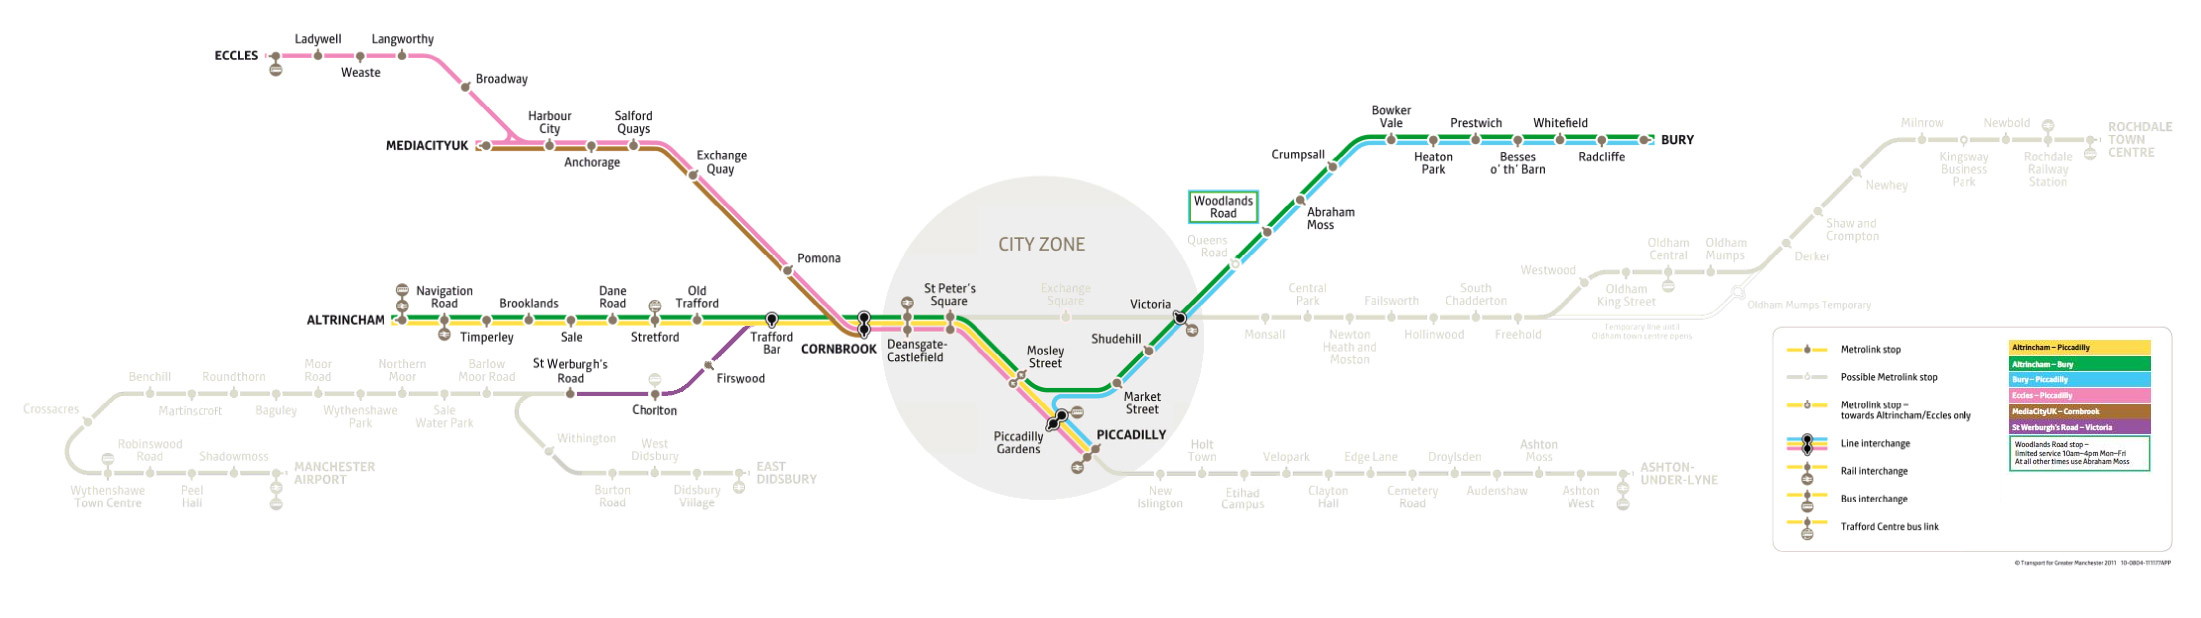 metrolink journey planner manchester